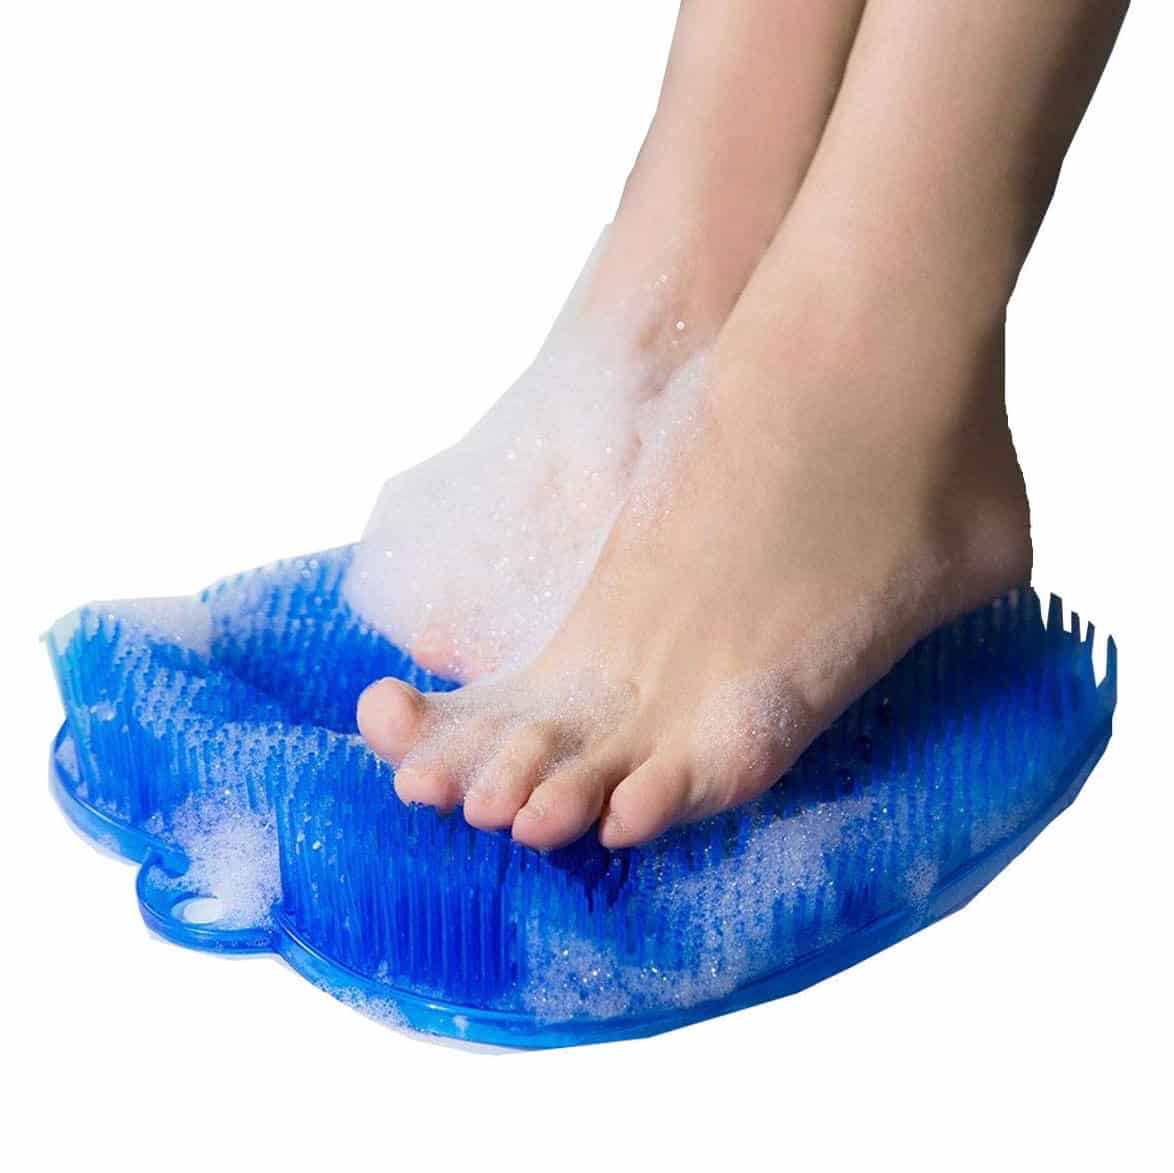 Коврик для мытья ног. Мытье ног. Щетка для мытья ног. Коврик с щетиной для мытья ног. Cleaning feet